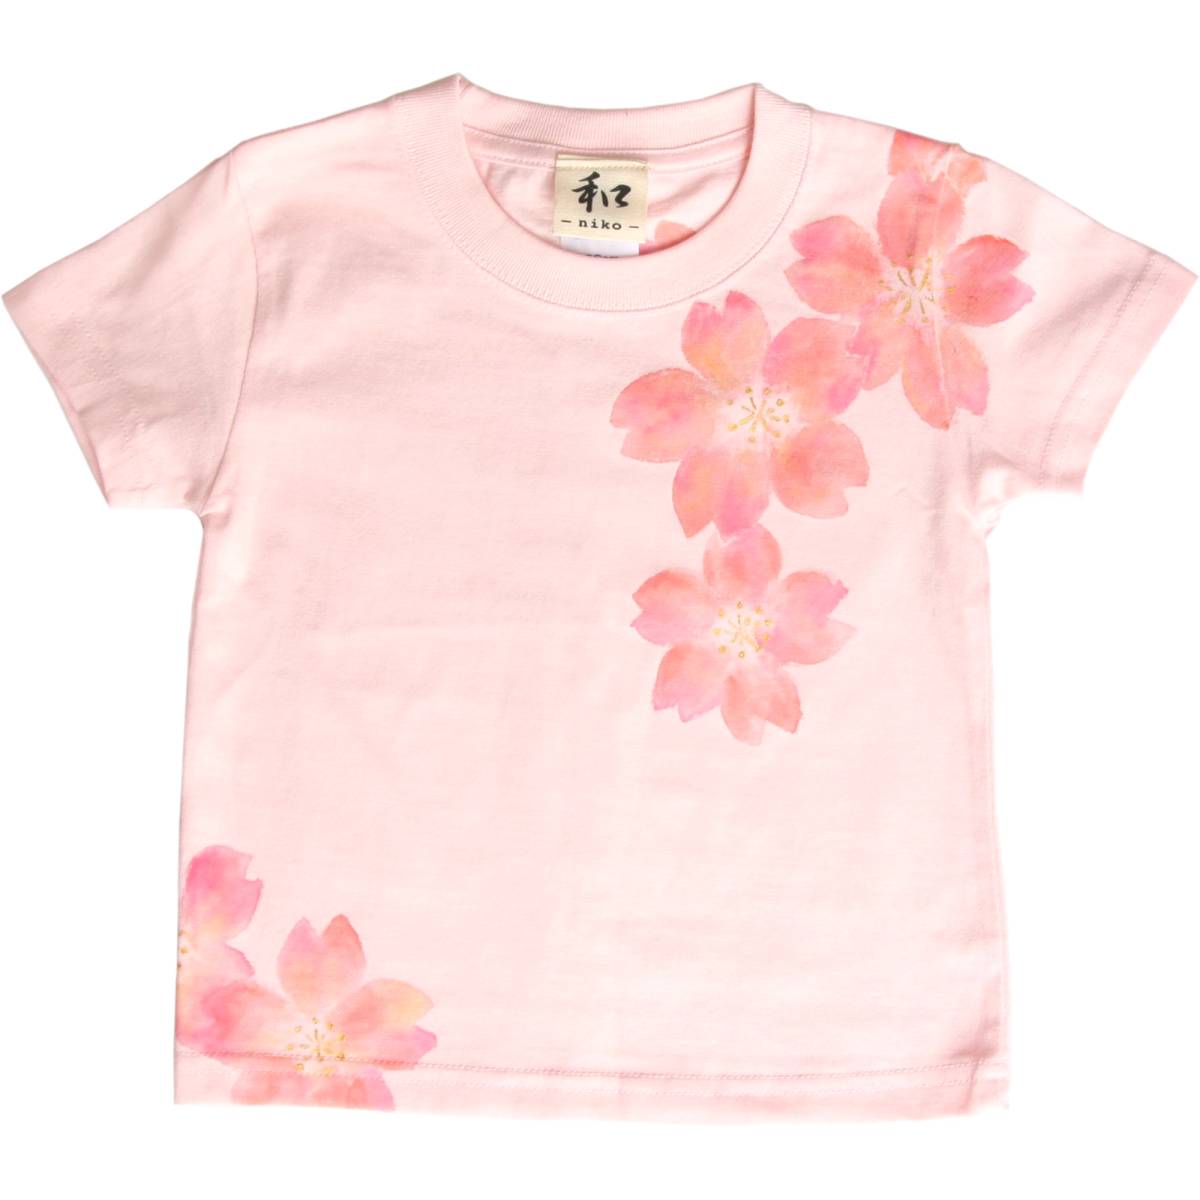 Children's Clothes Kids T-Shirt Size 110 Pink Cherry Blossom Pattern T-Shirt Handmade Hand-painted T-Shirt Japanese Pattern Spring, tops, short sleeve t-shirt, 110(105~114cm)